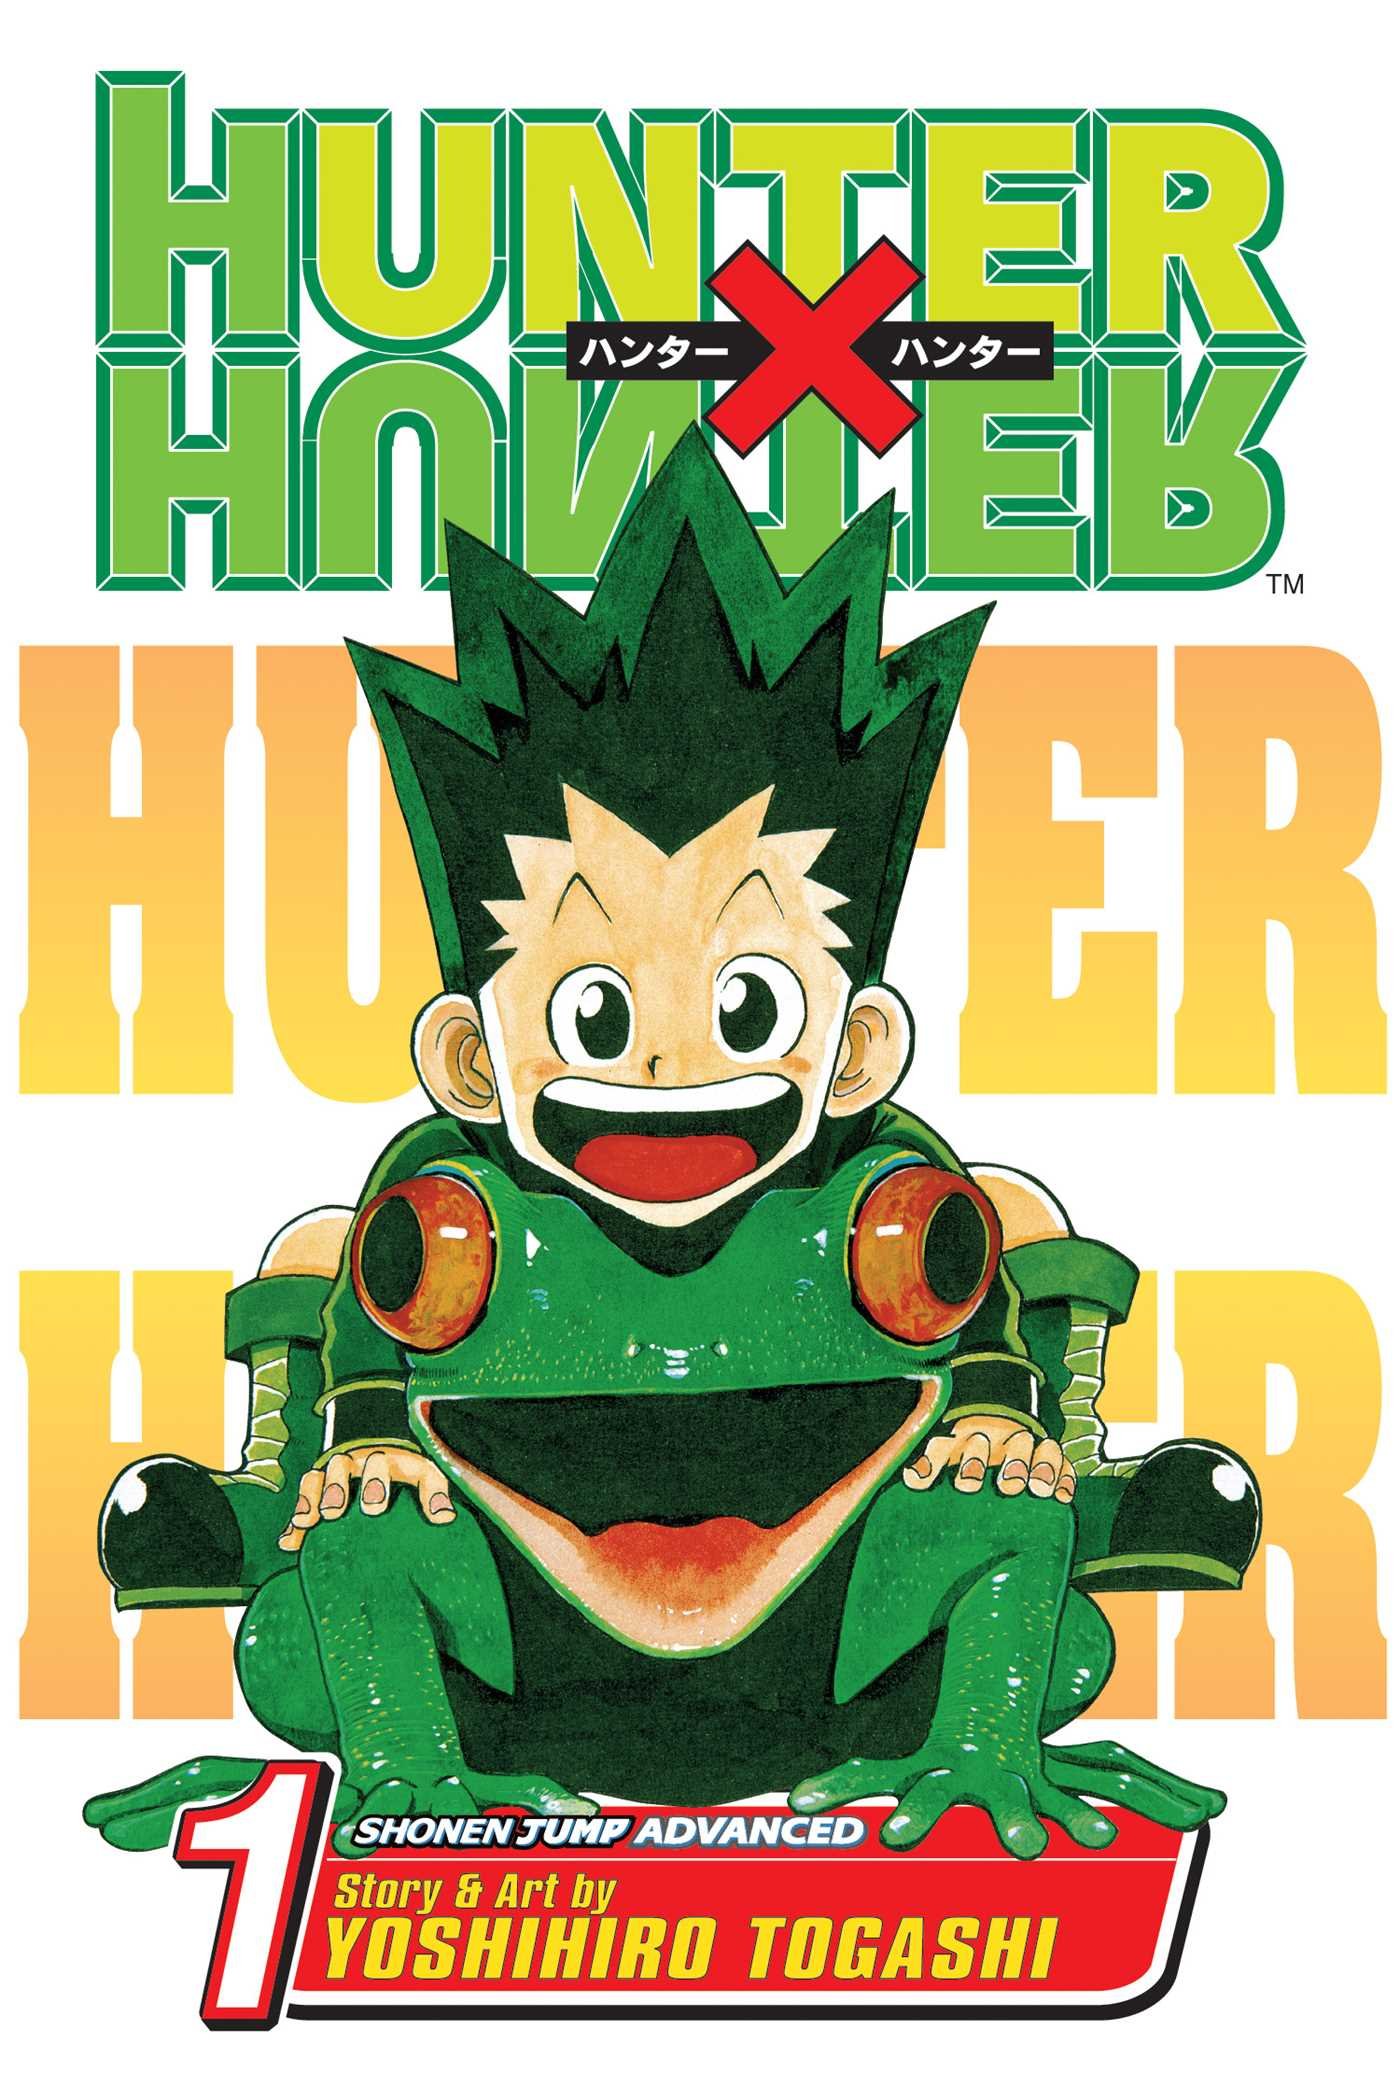 Hunter X Hunter Manga Return Confirmed by Author Togashi - The Teal Mango